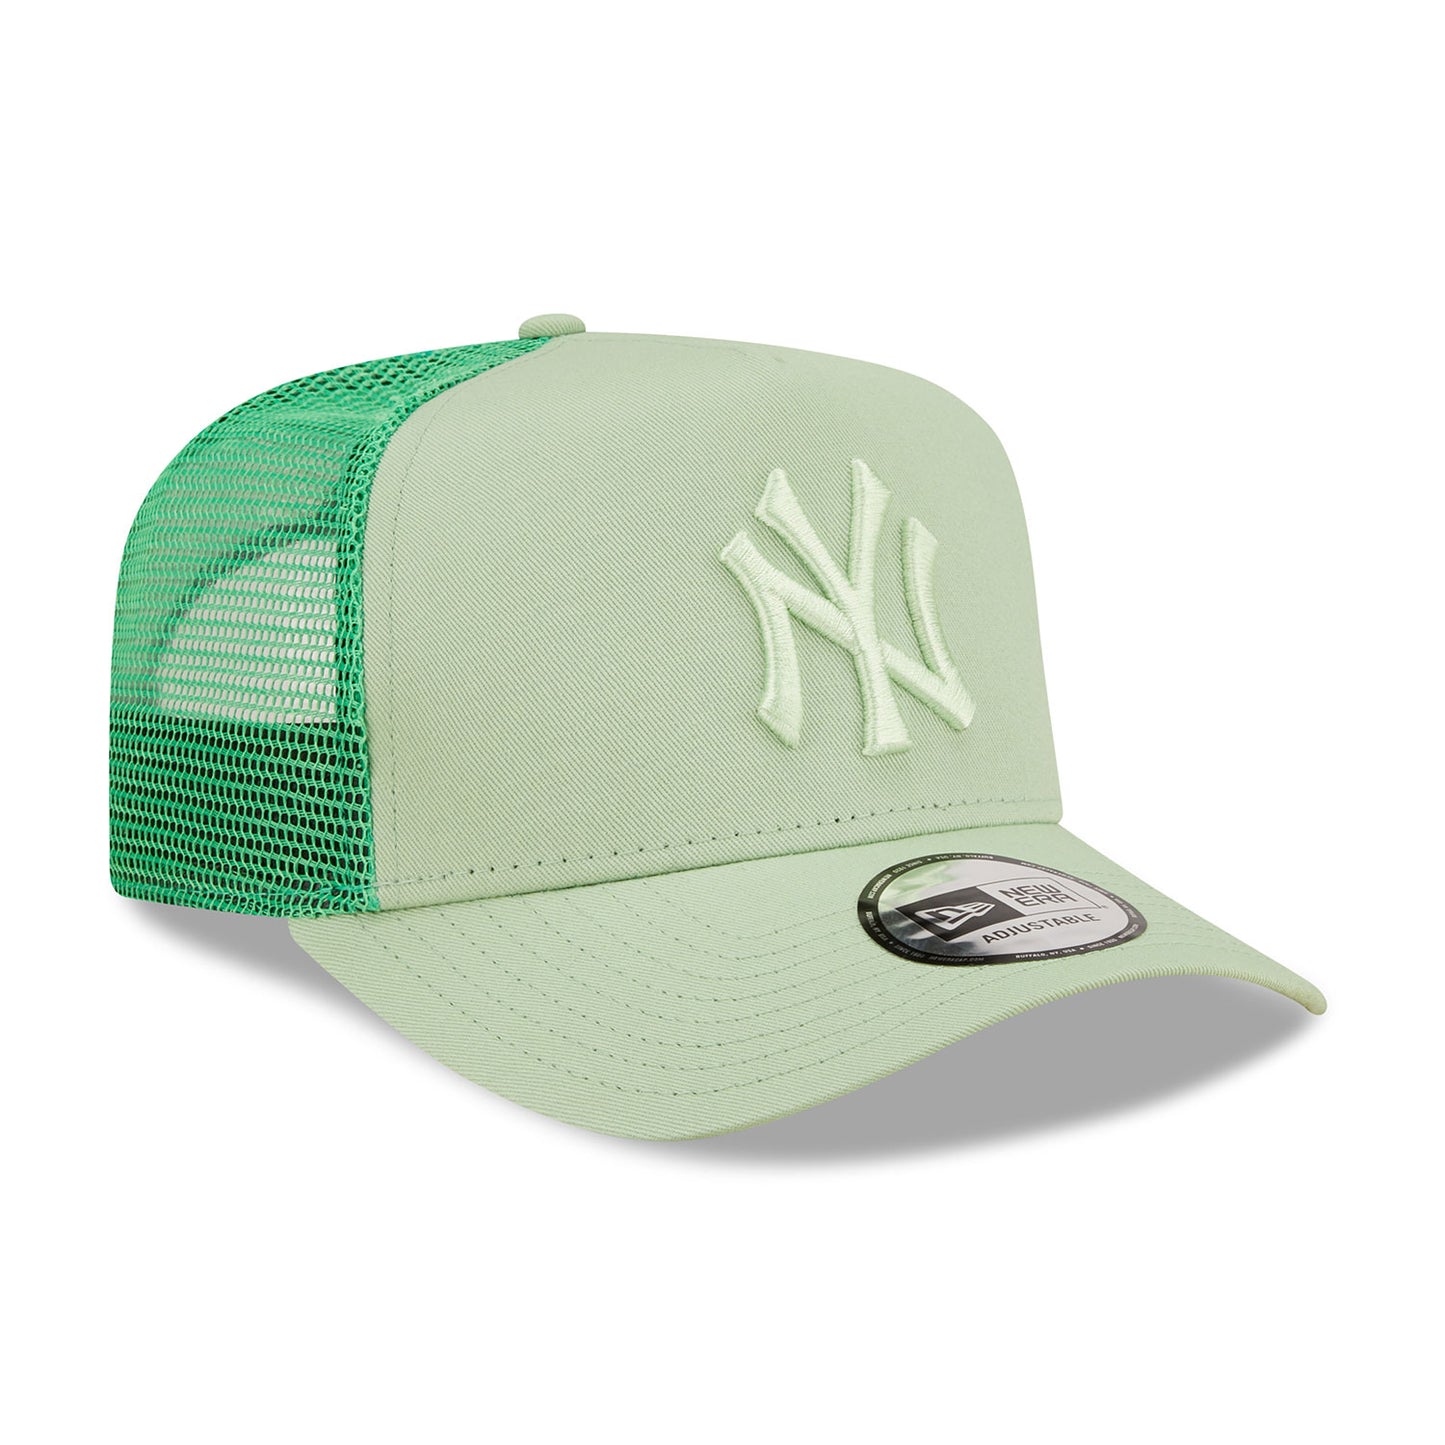 NY Yankees New Era Trucker Cap adjustable light green